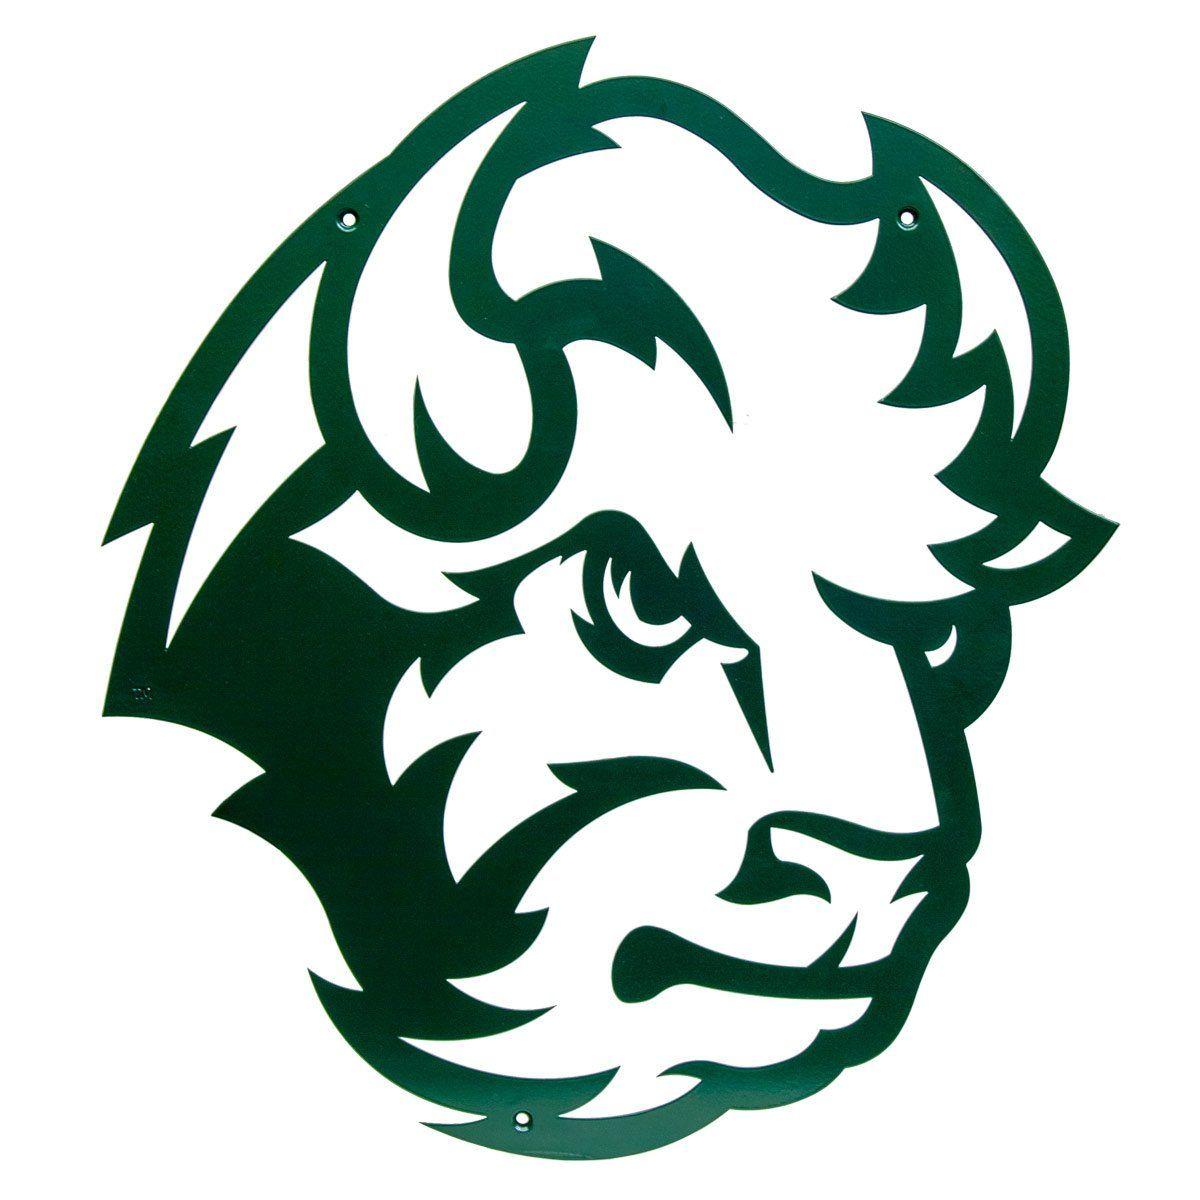 NDSU Logo - Amazon.com: North Dakota State University NDSU Bison Head Logo ...